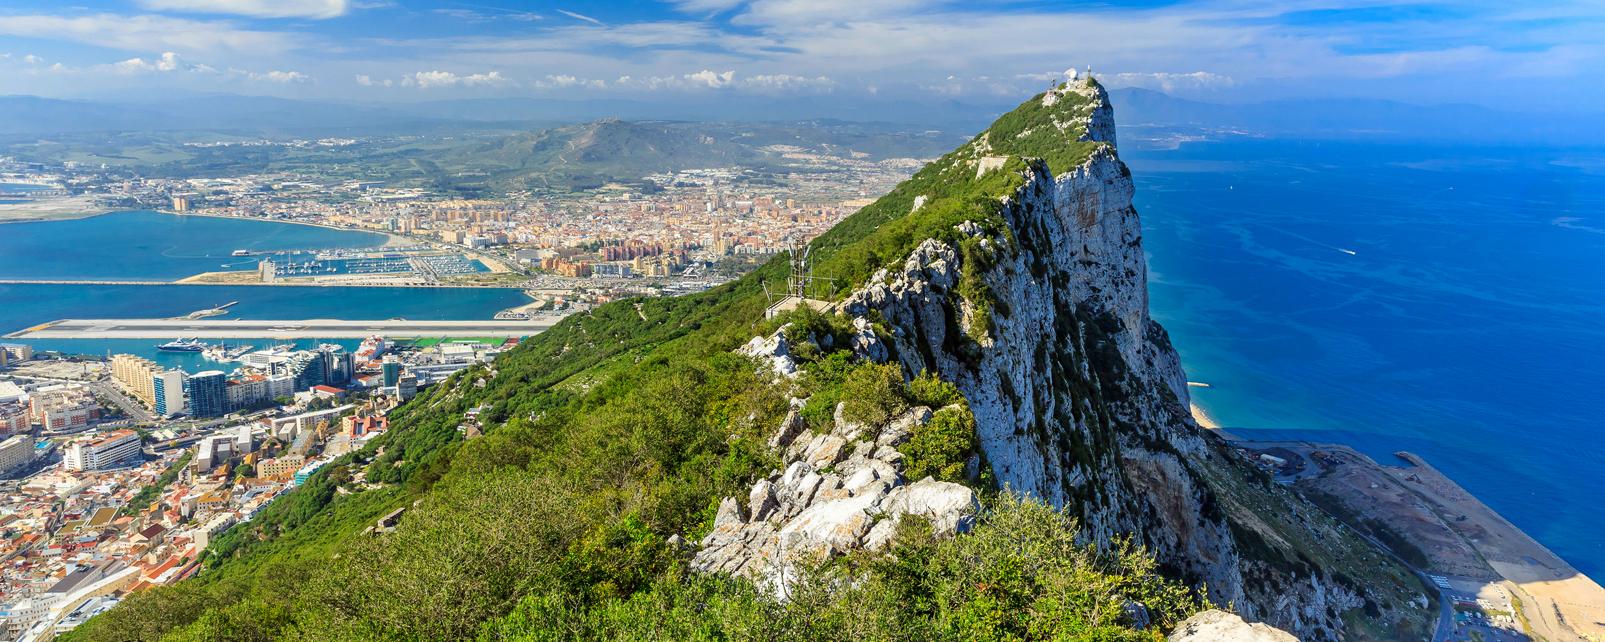 visit-gibraltar-reasons-to-go-easyvoyage